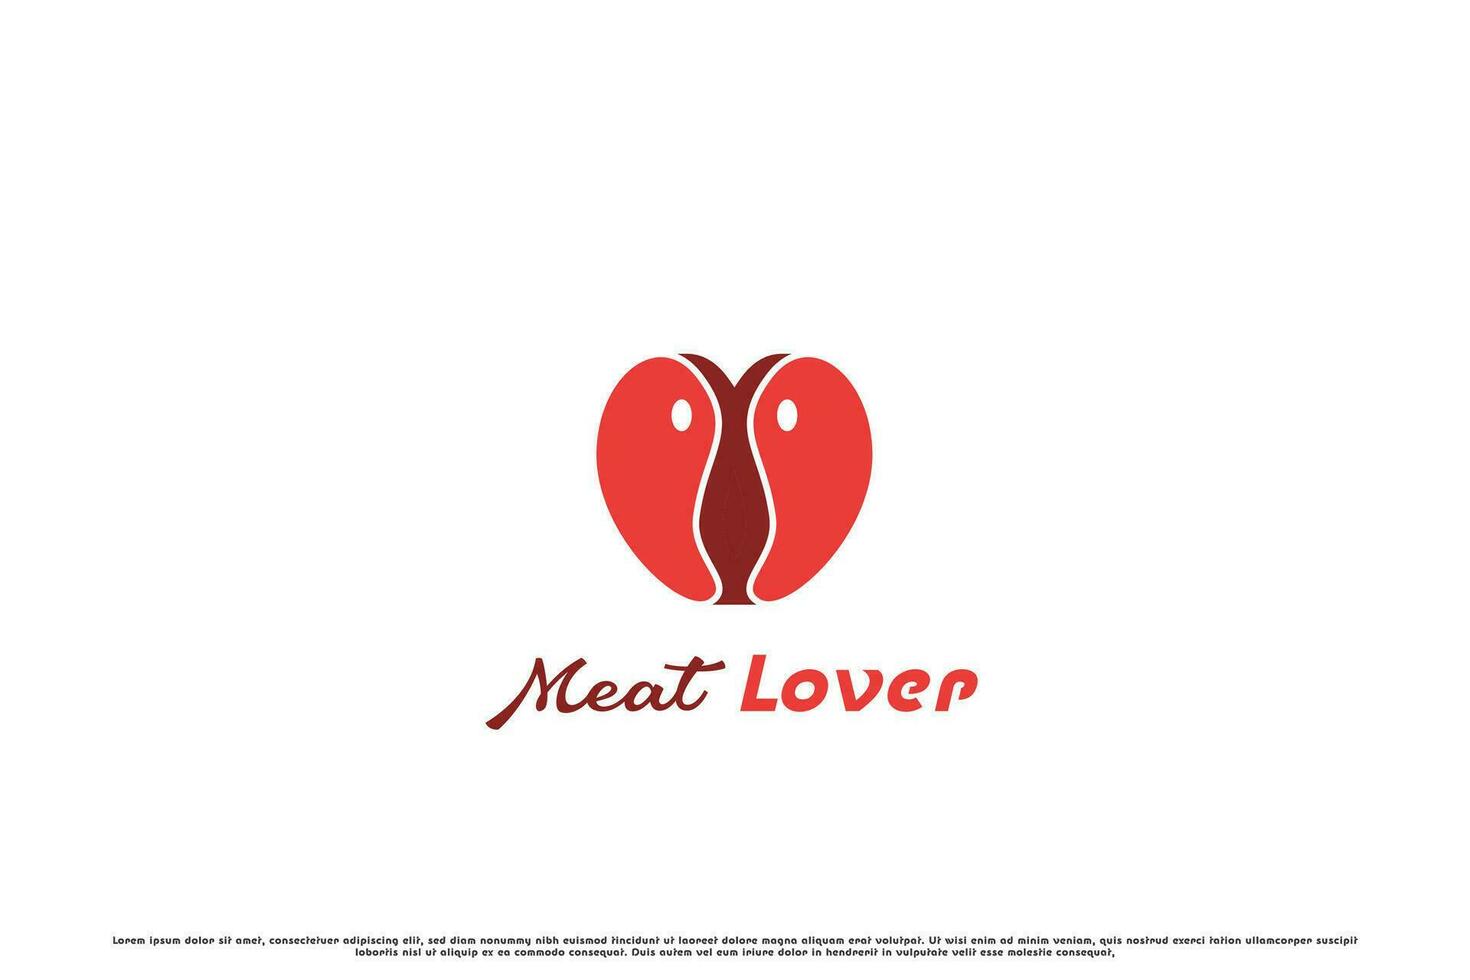 carne amor logo diseño ilustración. creativo silueta de carne en amor forma sencillo plano carne de vaca corazón wagyu delicioso restaurante café restaurante calle comida Condimento cocina receta delicioso gusto. vector